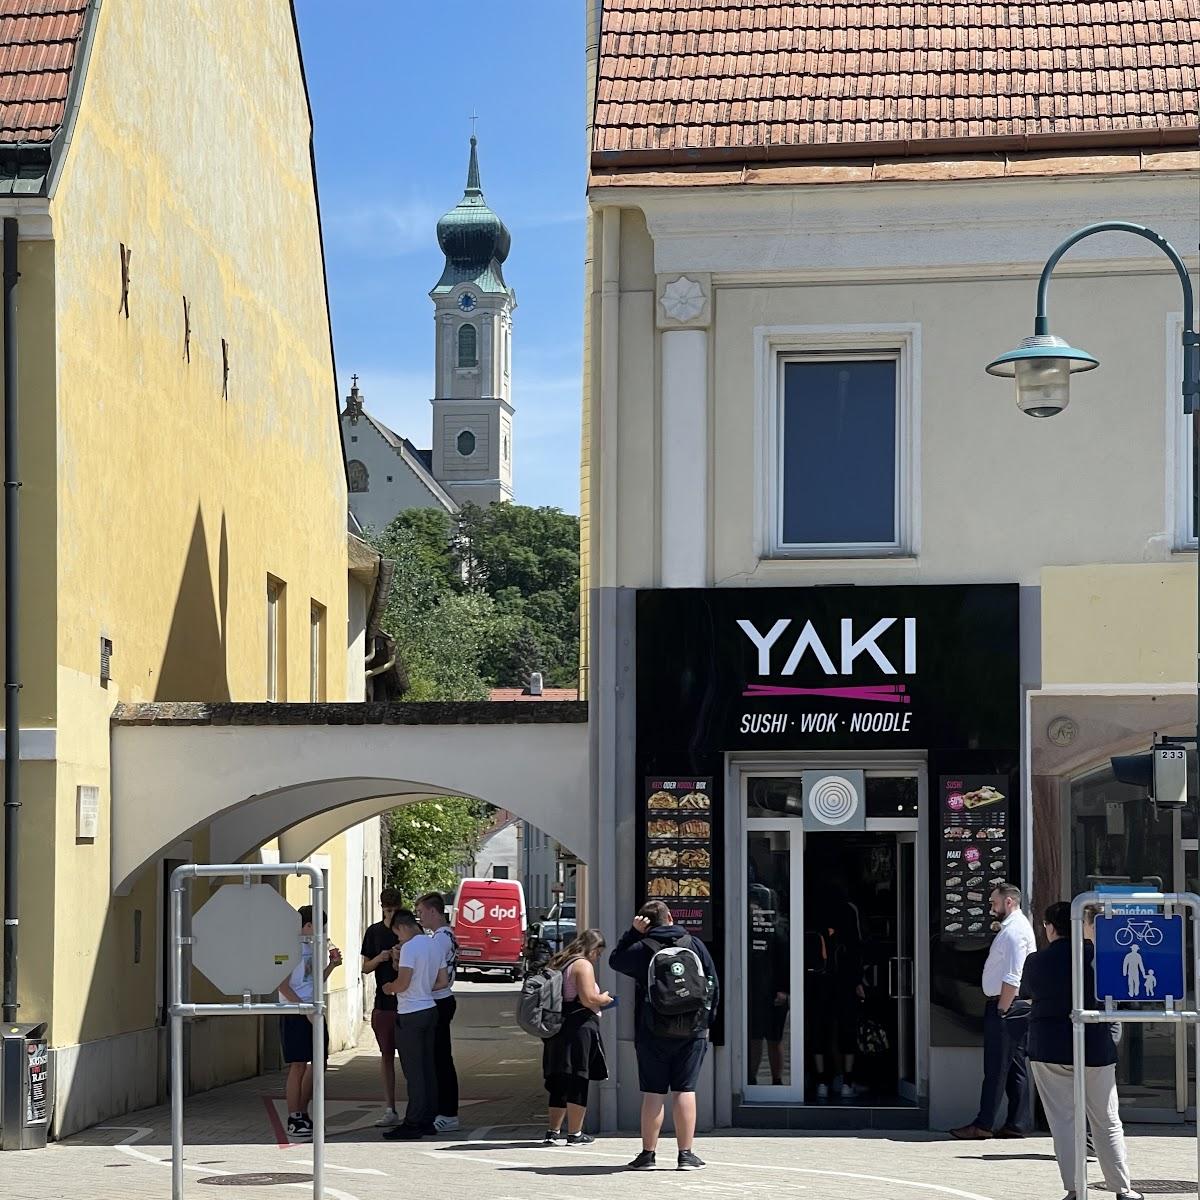 Restaurant "Yaki Noodle" in Mistelbach